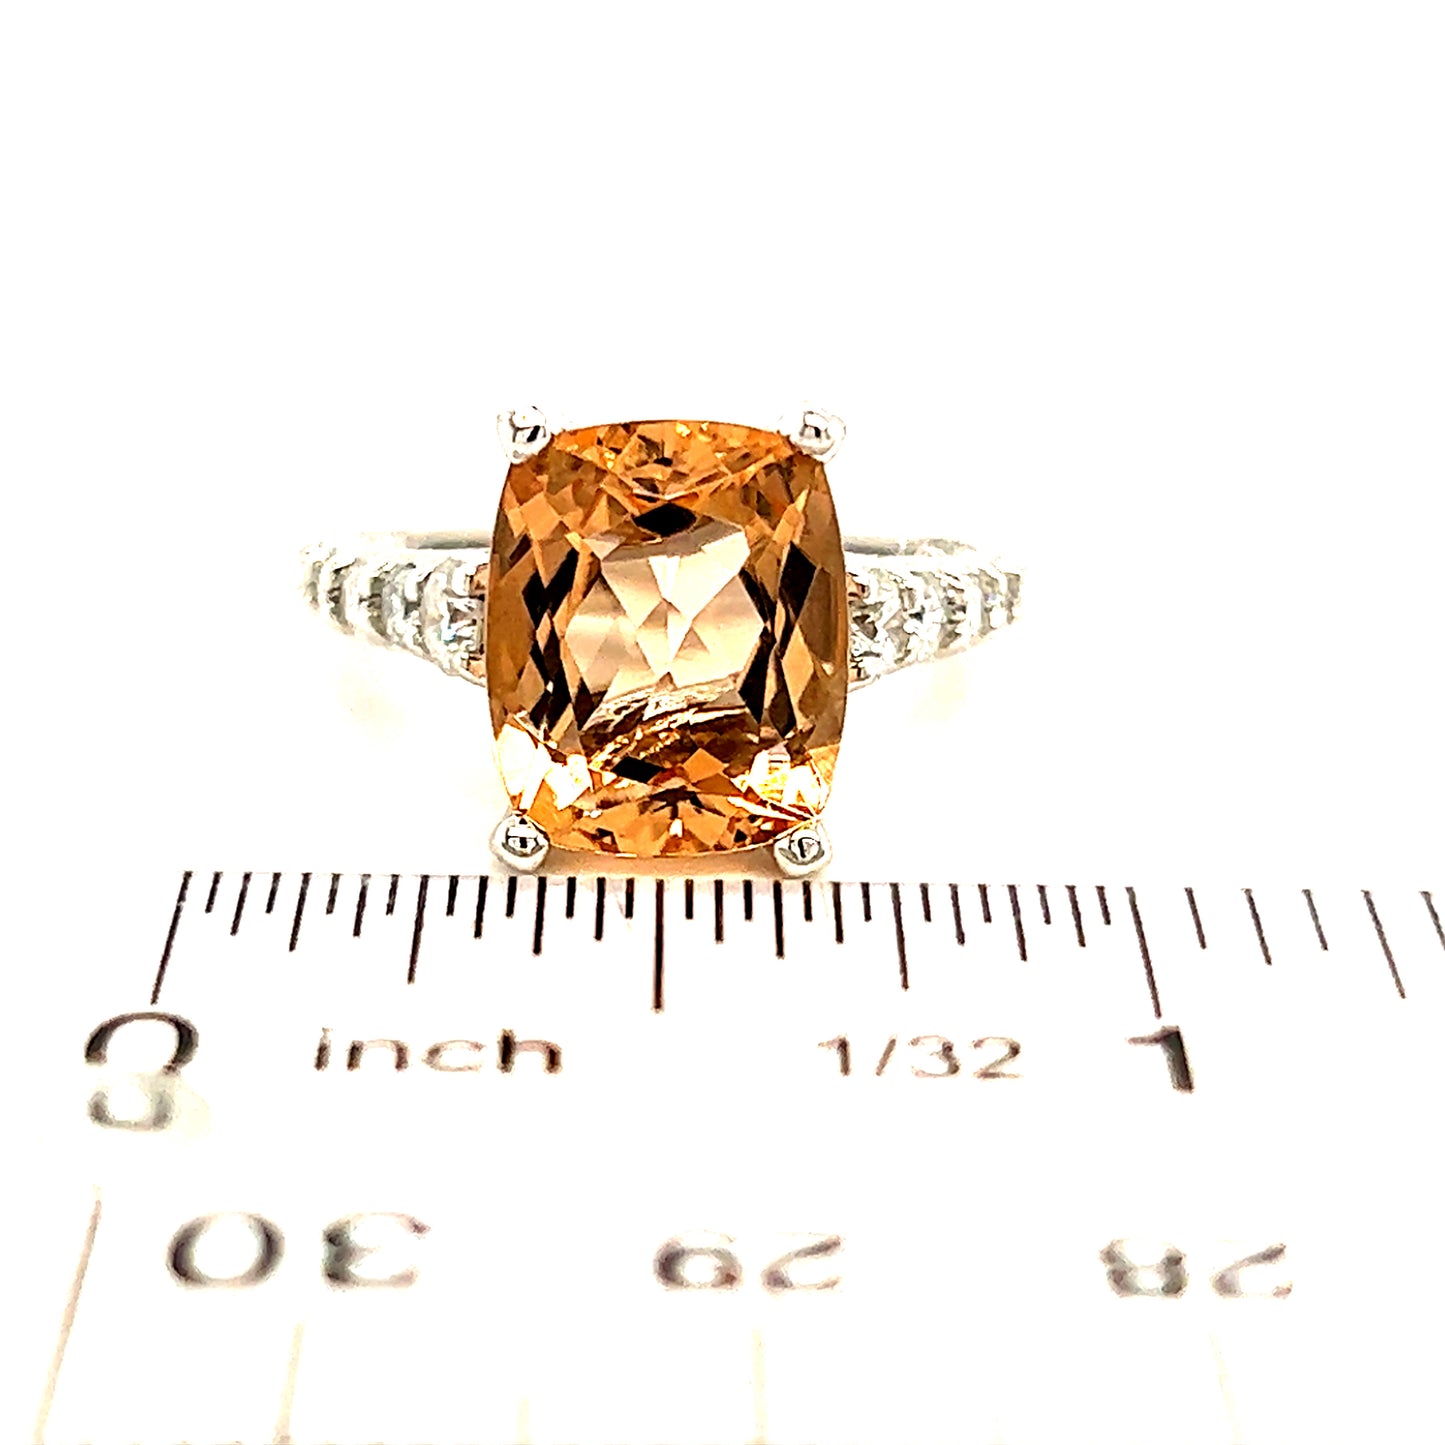 Natural Morganite Diamond Ring Size 6.25 14k Gold 4.26 TCW Certified $6,950 215089